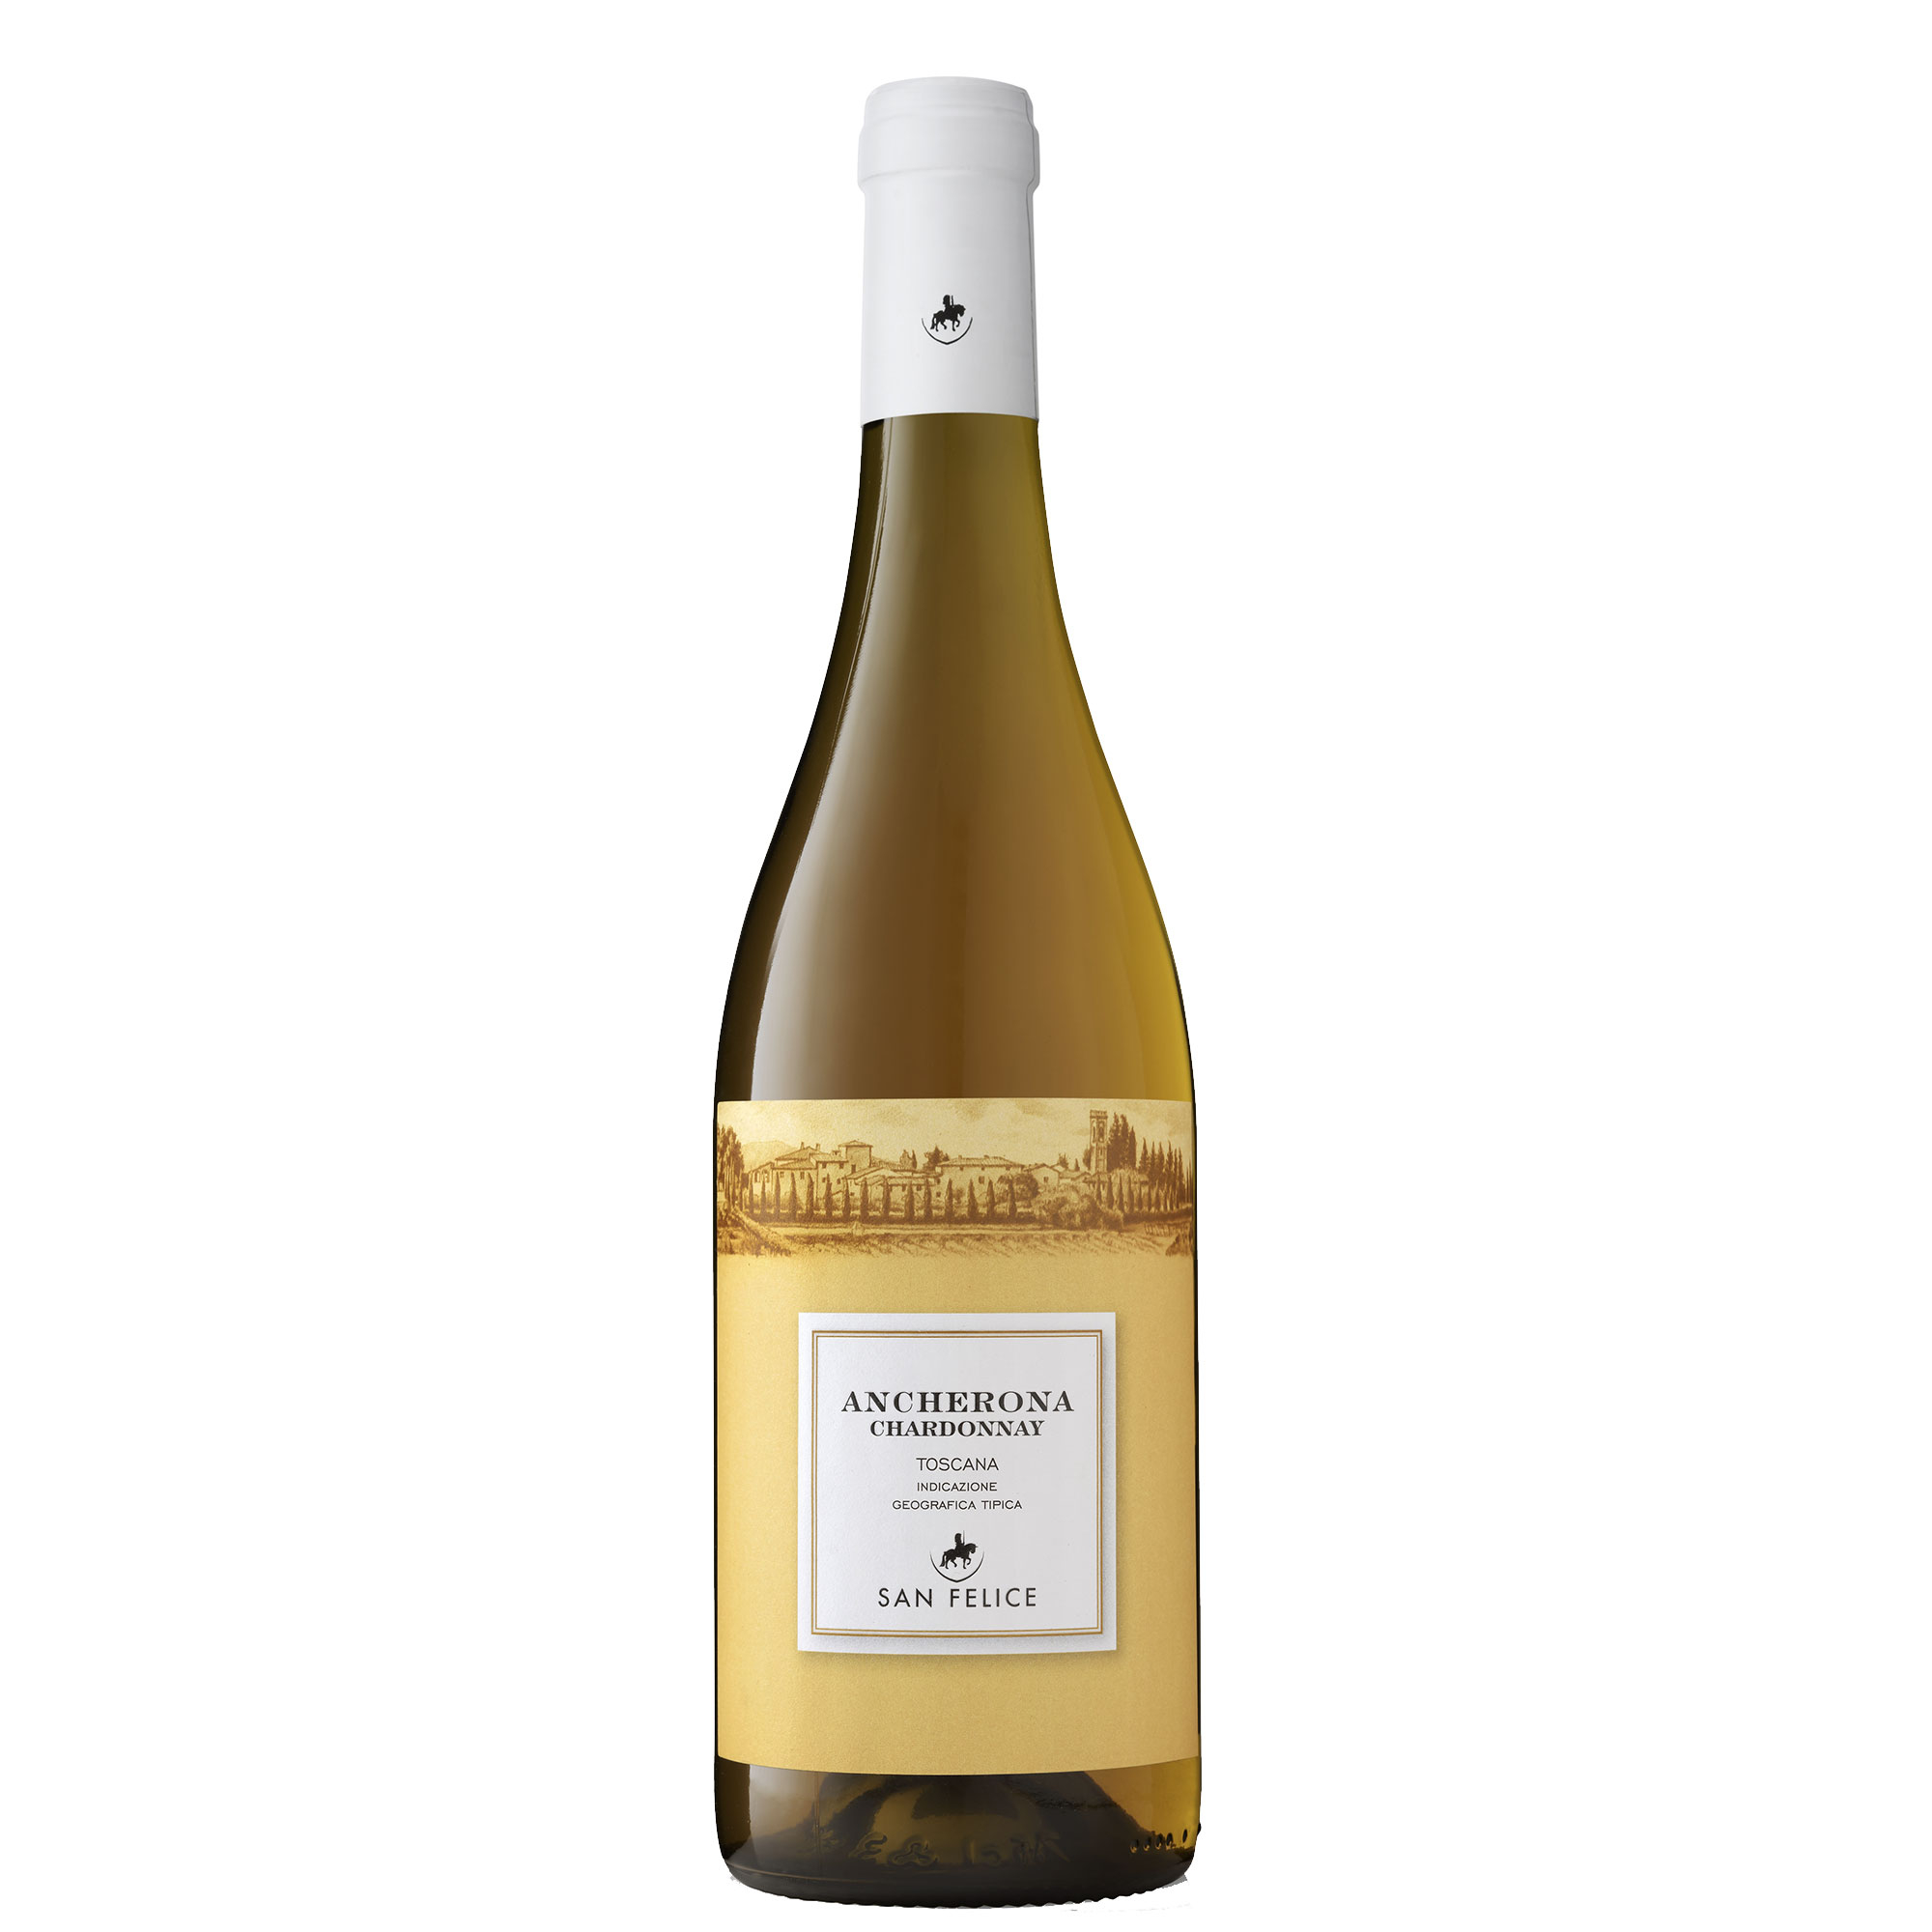 Toscana Chardonnay Igt Ancherona 2021 120531 IT Tannico